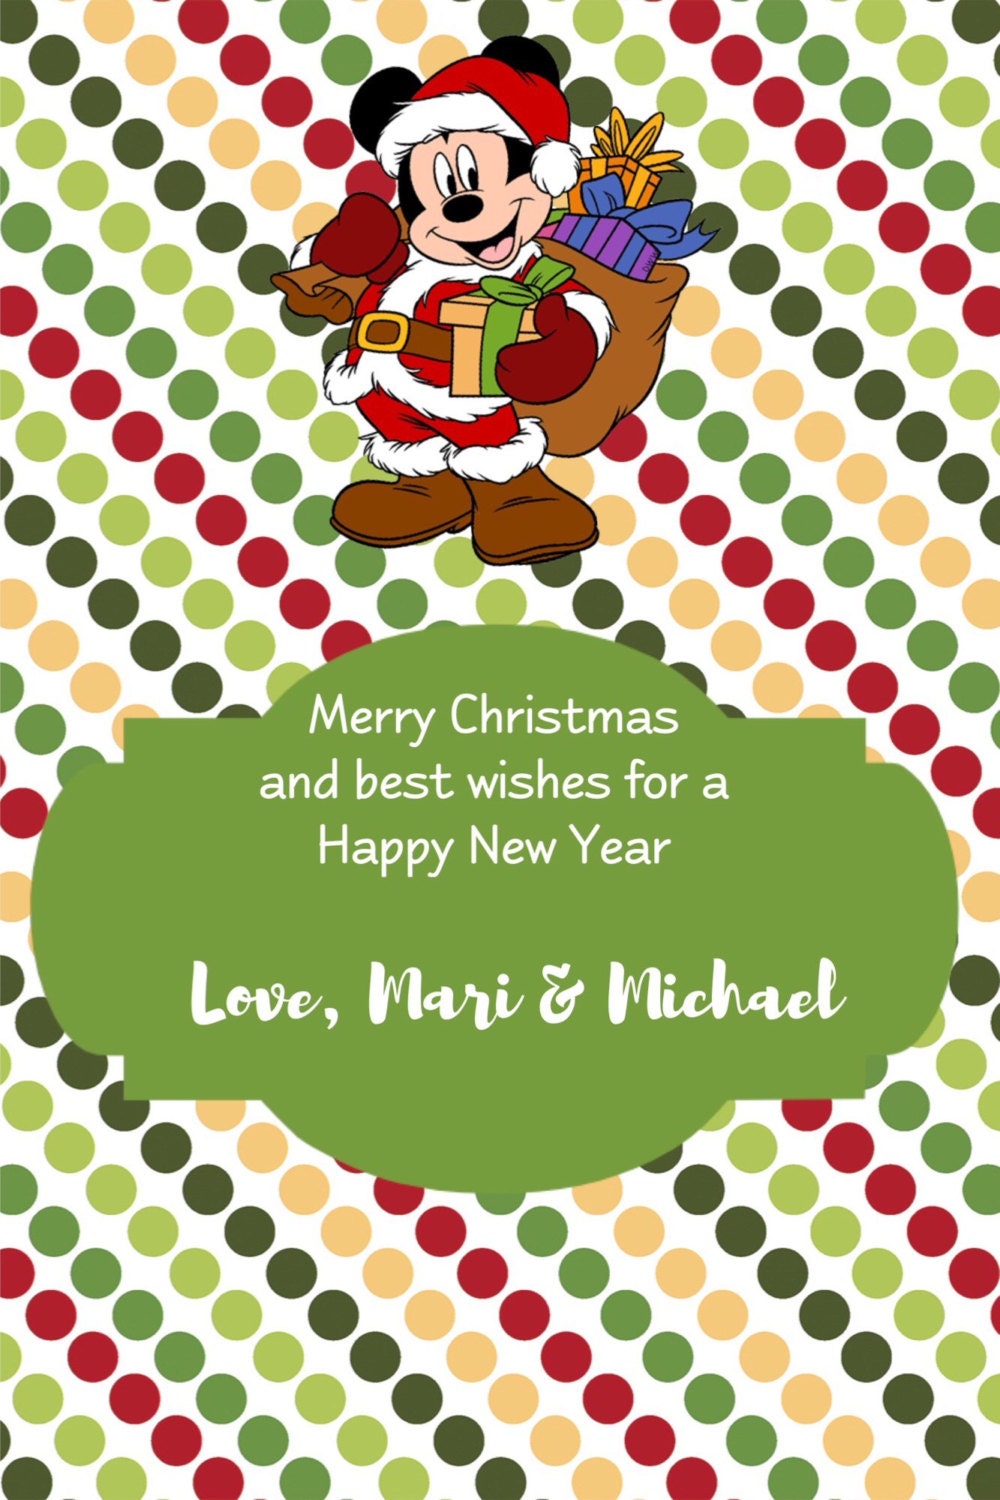 mickey-mouse-christmas-cards-santa-mickey-mouse-santa